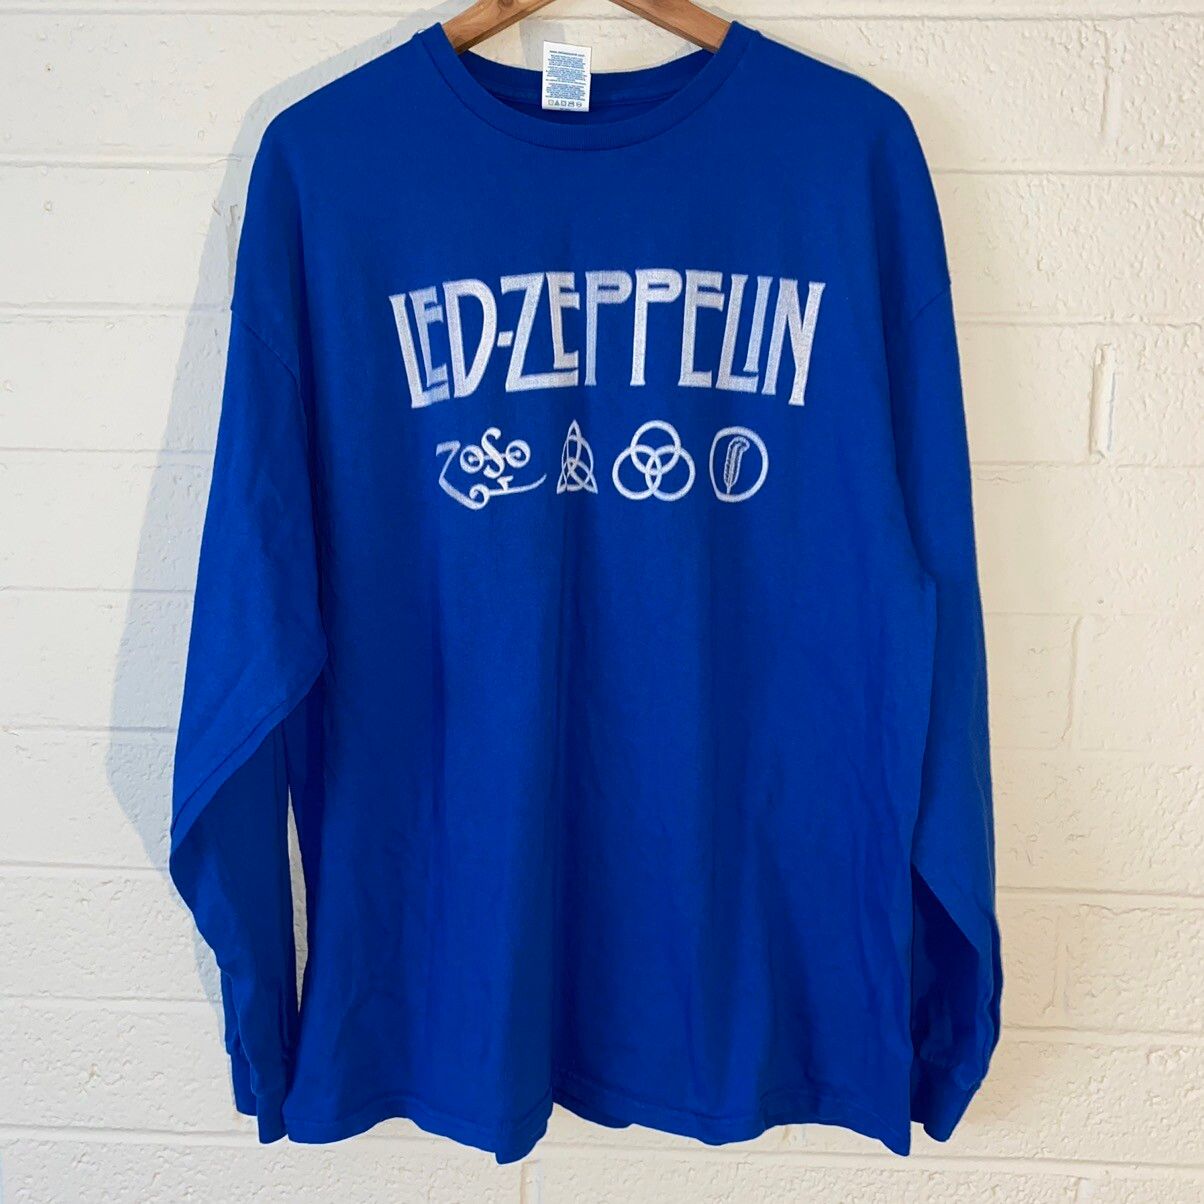 Led Zeppelin Led Zeppelin long sleeve tshirt Size US XL / EU 56 / 4 - 1 Preview